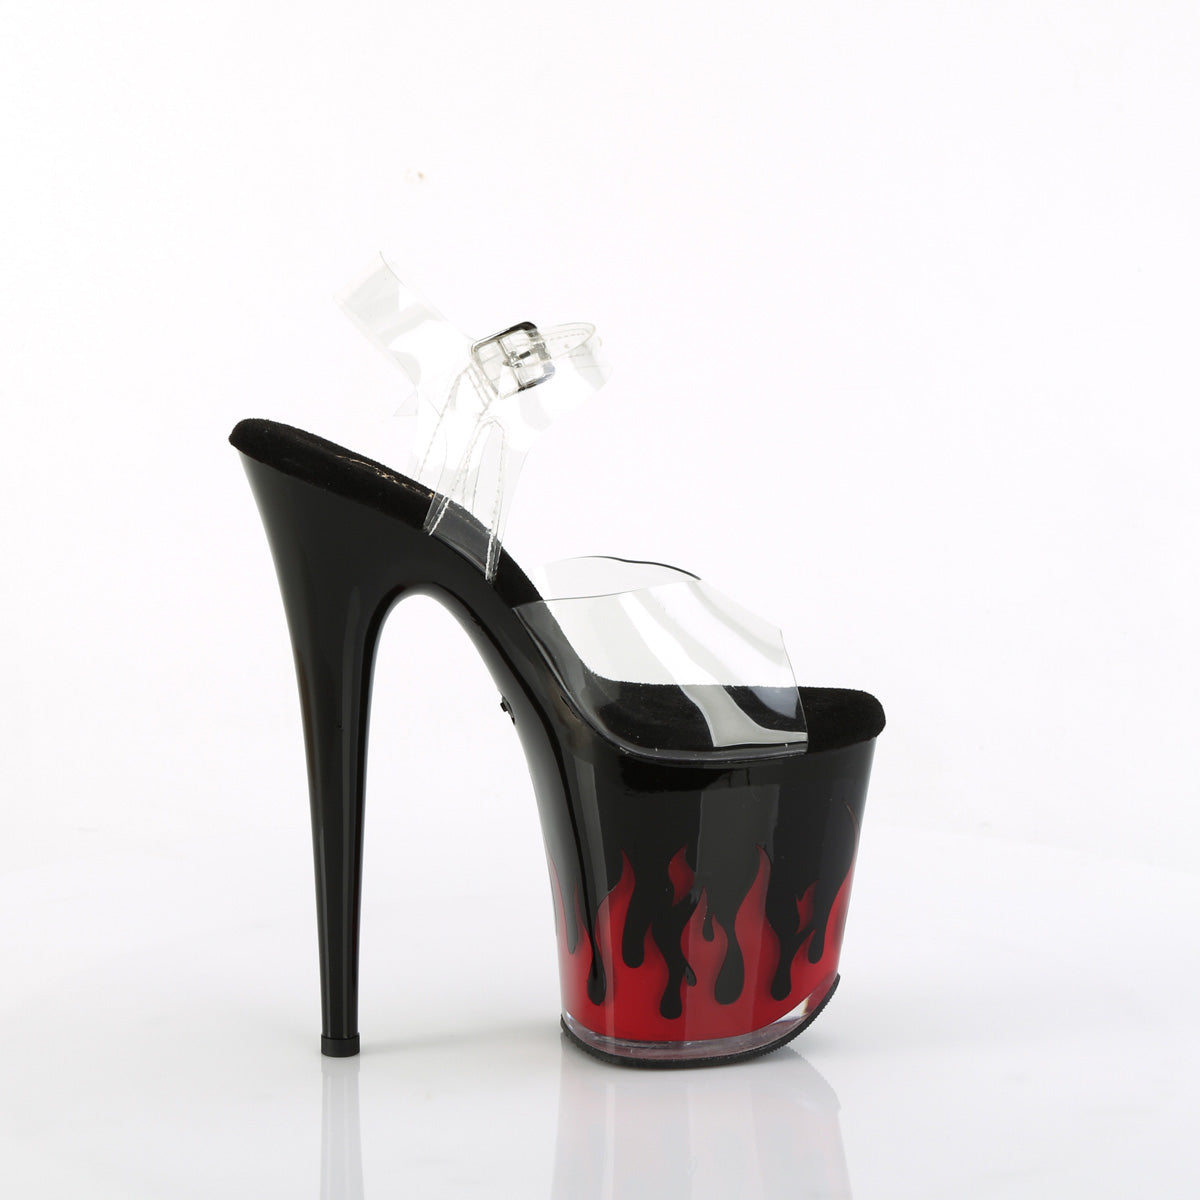 FLAMINGO-808NLFL Black & Red Ankle Peep Toe High Heel